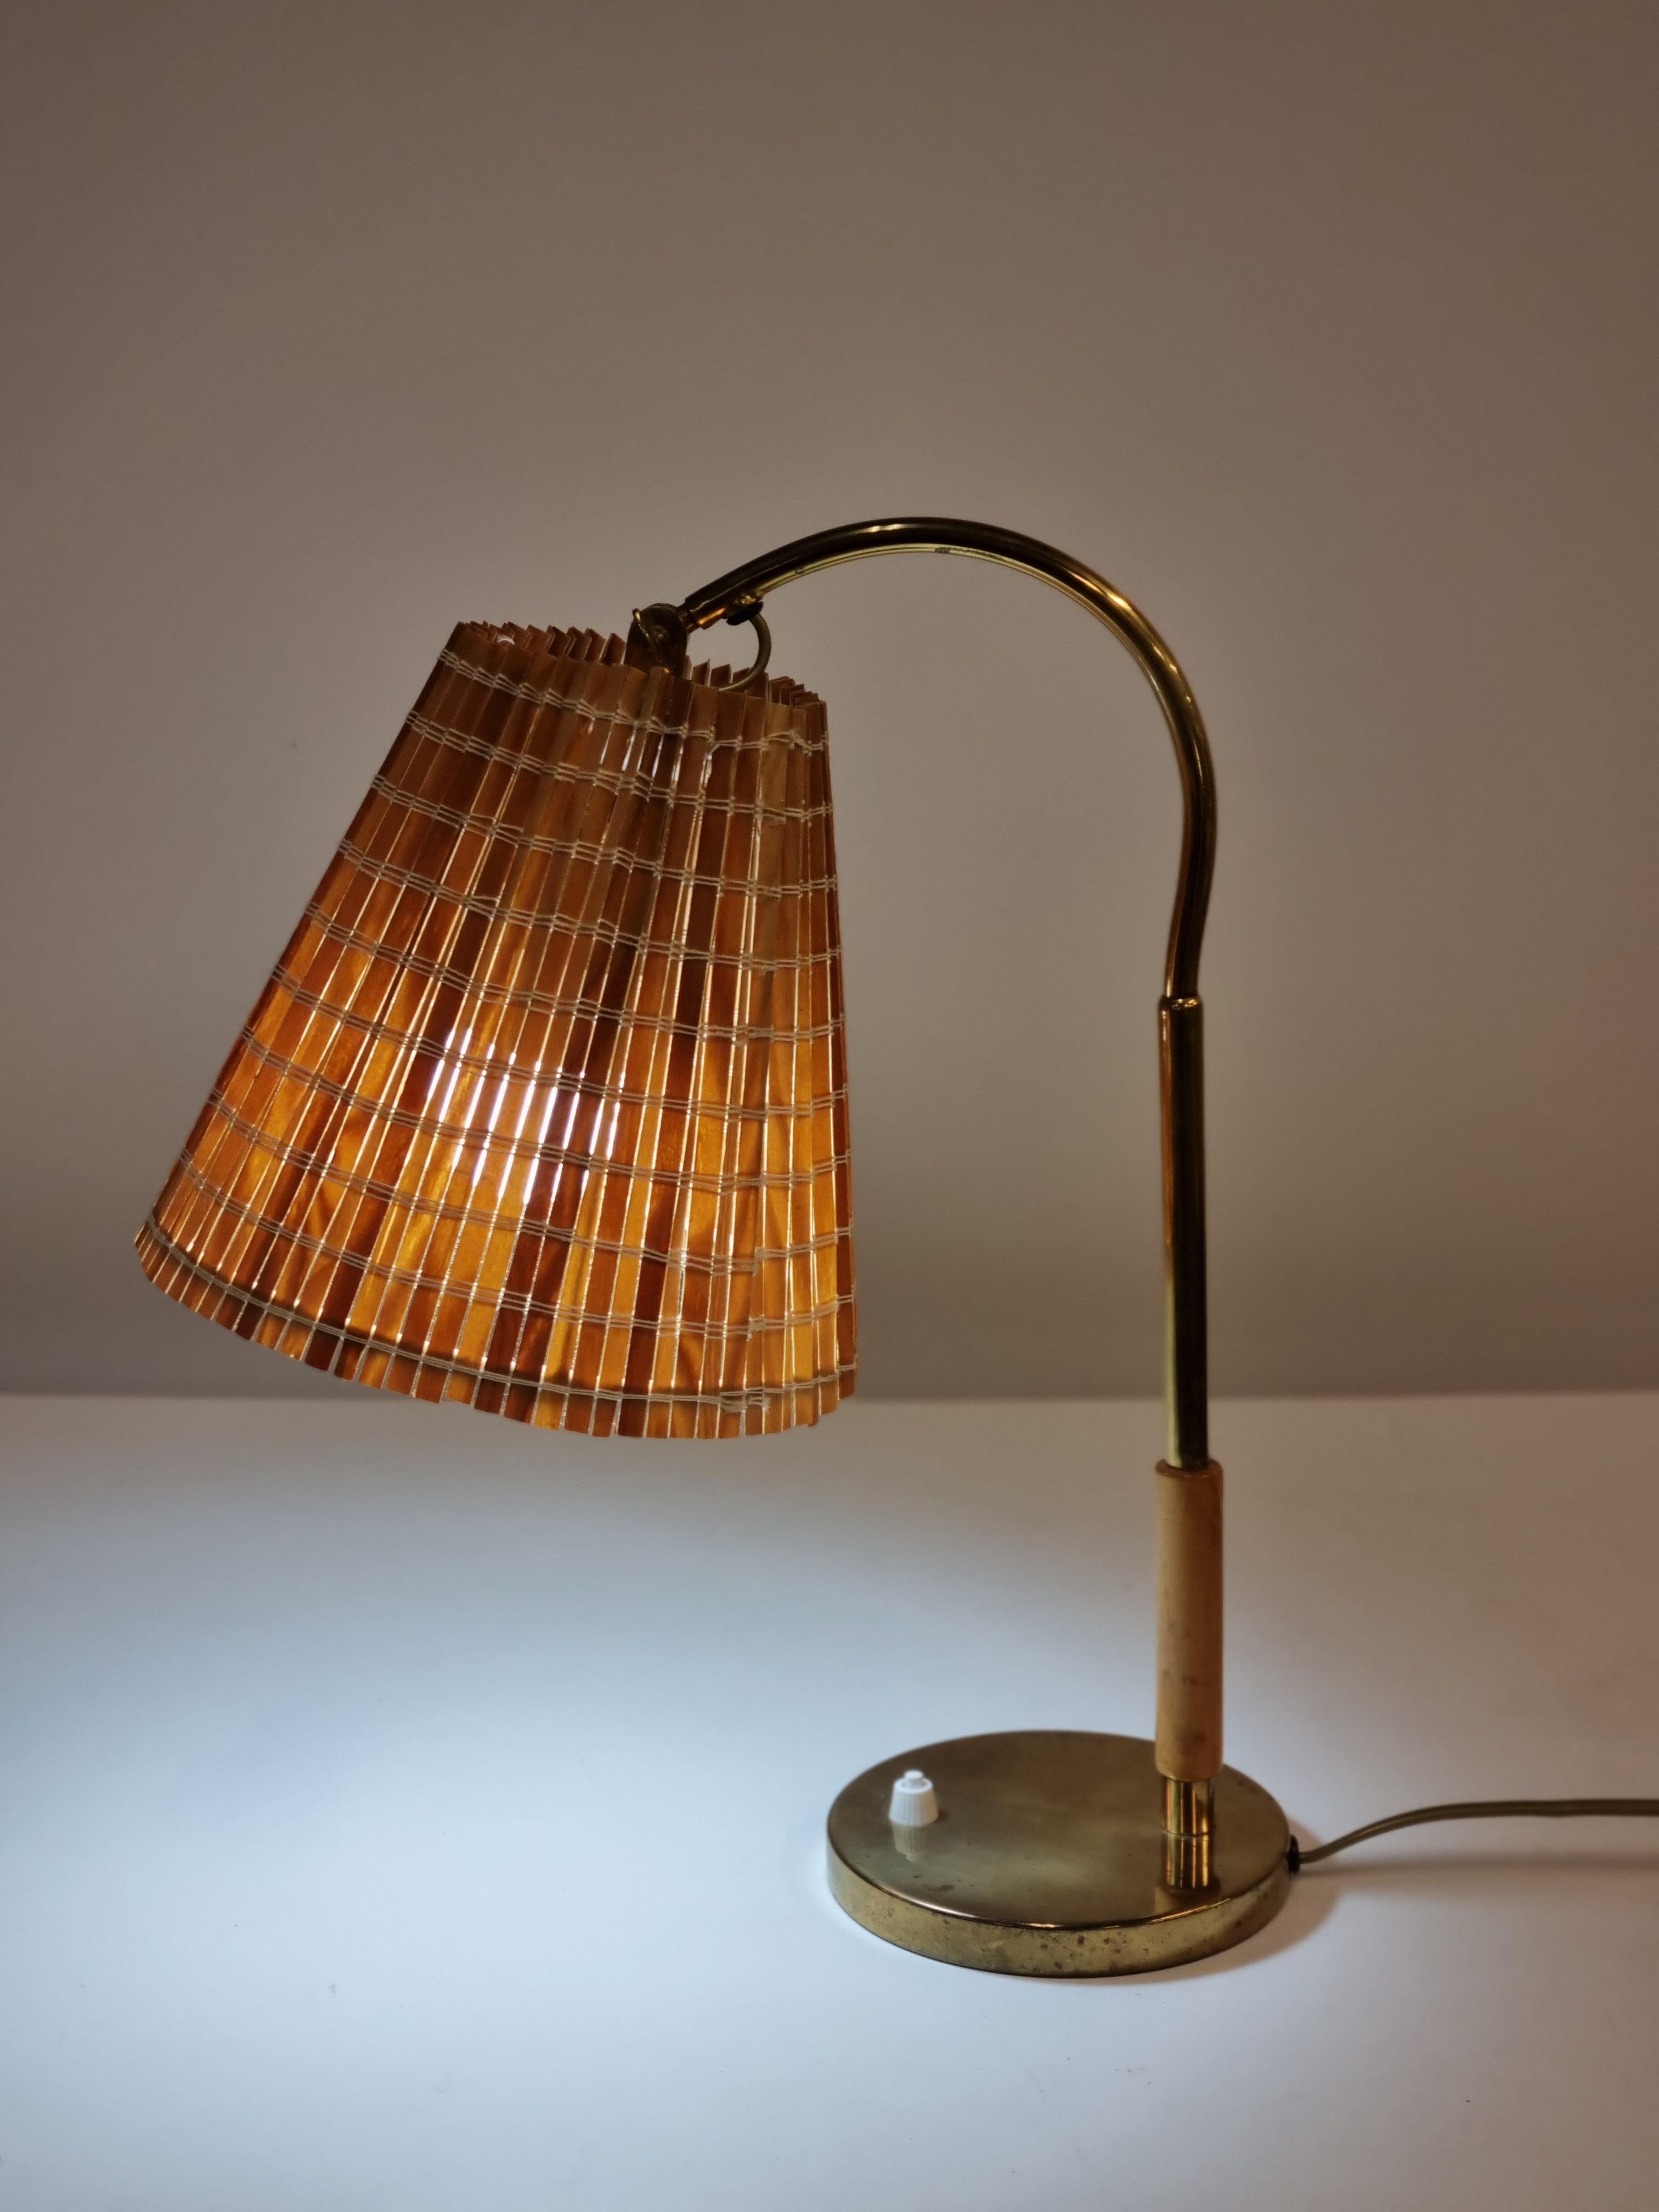 Finnish Paavo Tynell, Table Lamp model 9201, Taito